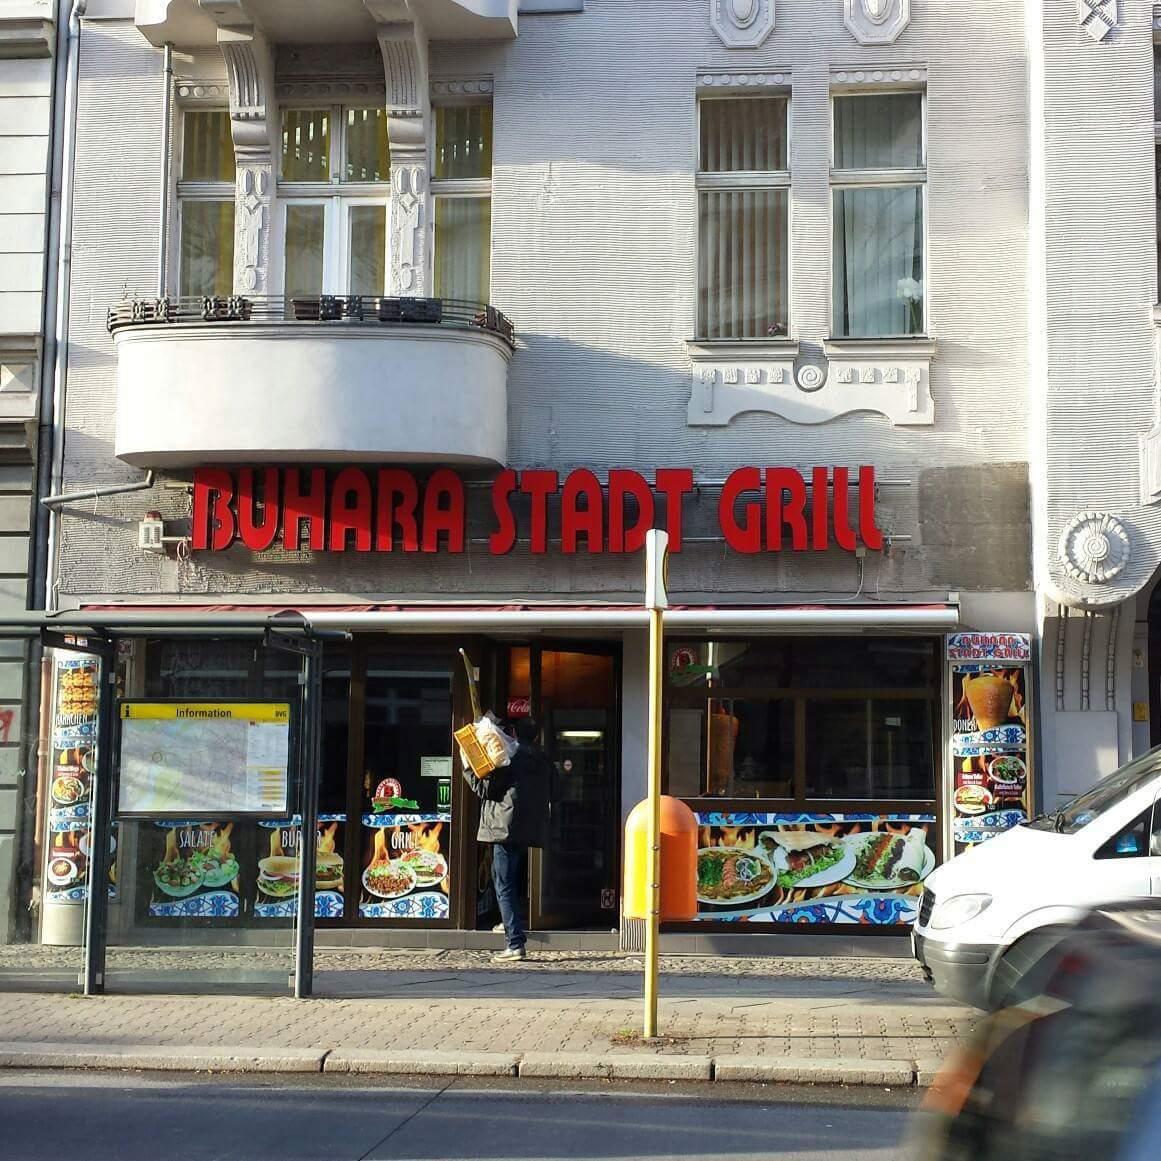 Restaurant "Buhara Stadt Grill" in Berlin